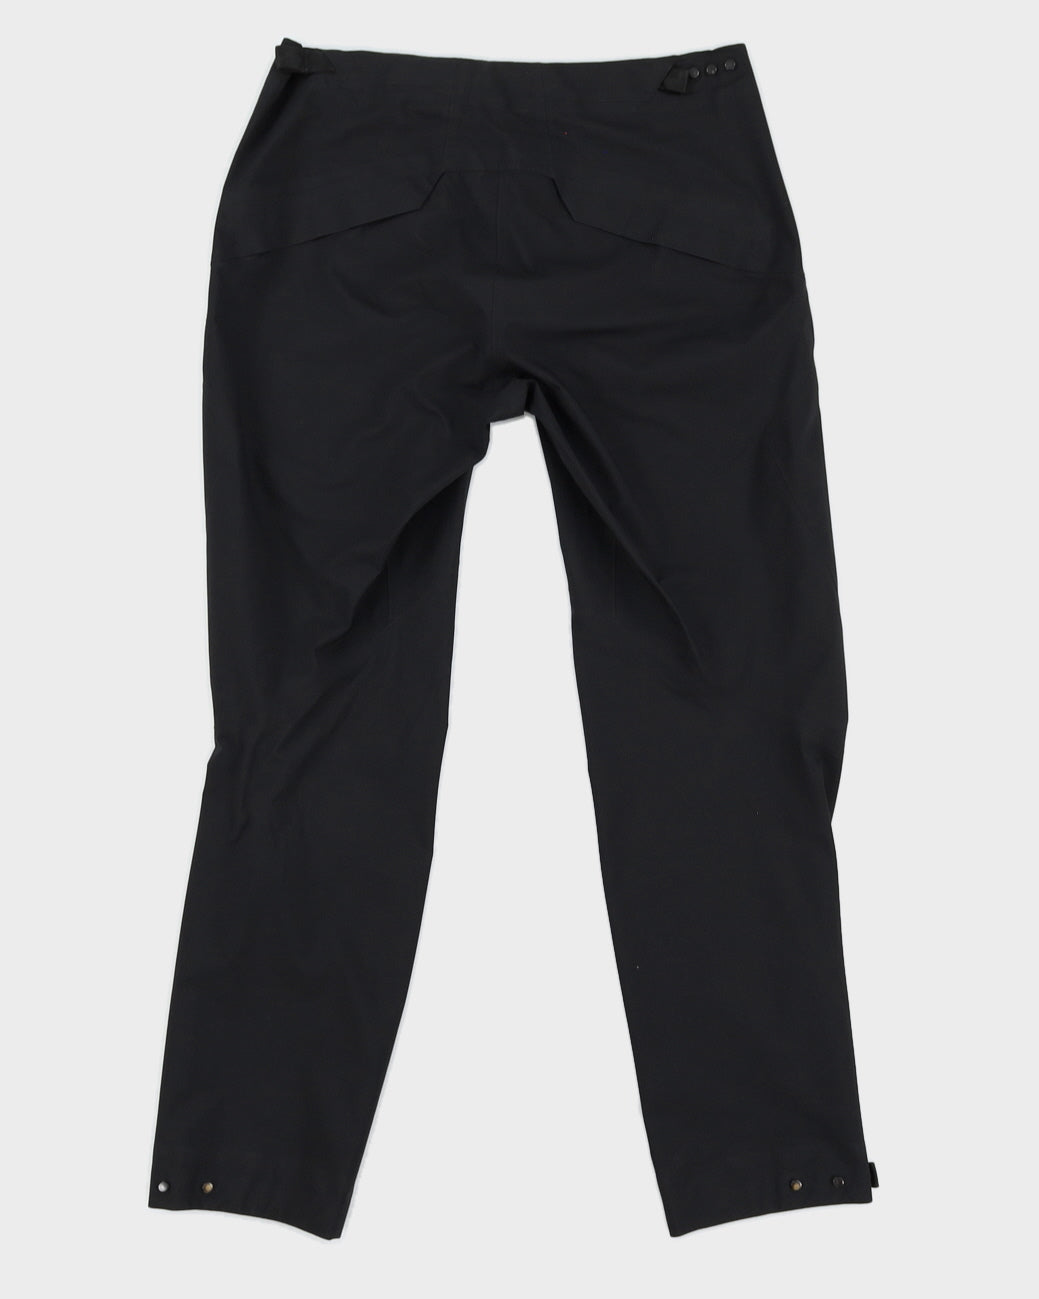 Arc'teryx Women's Black Nylon Trousers - S